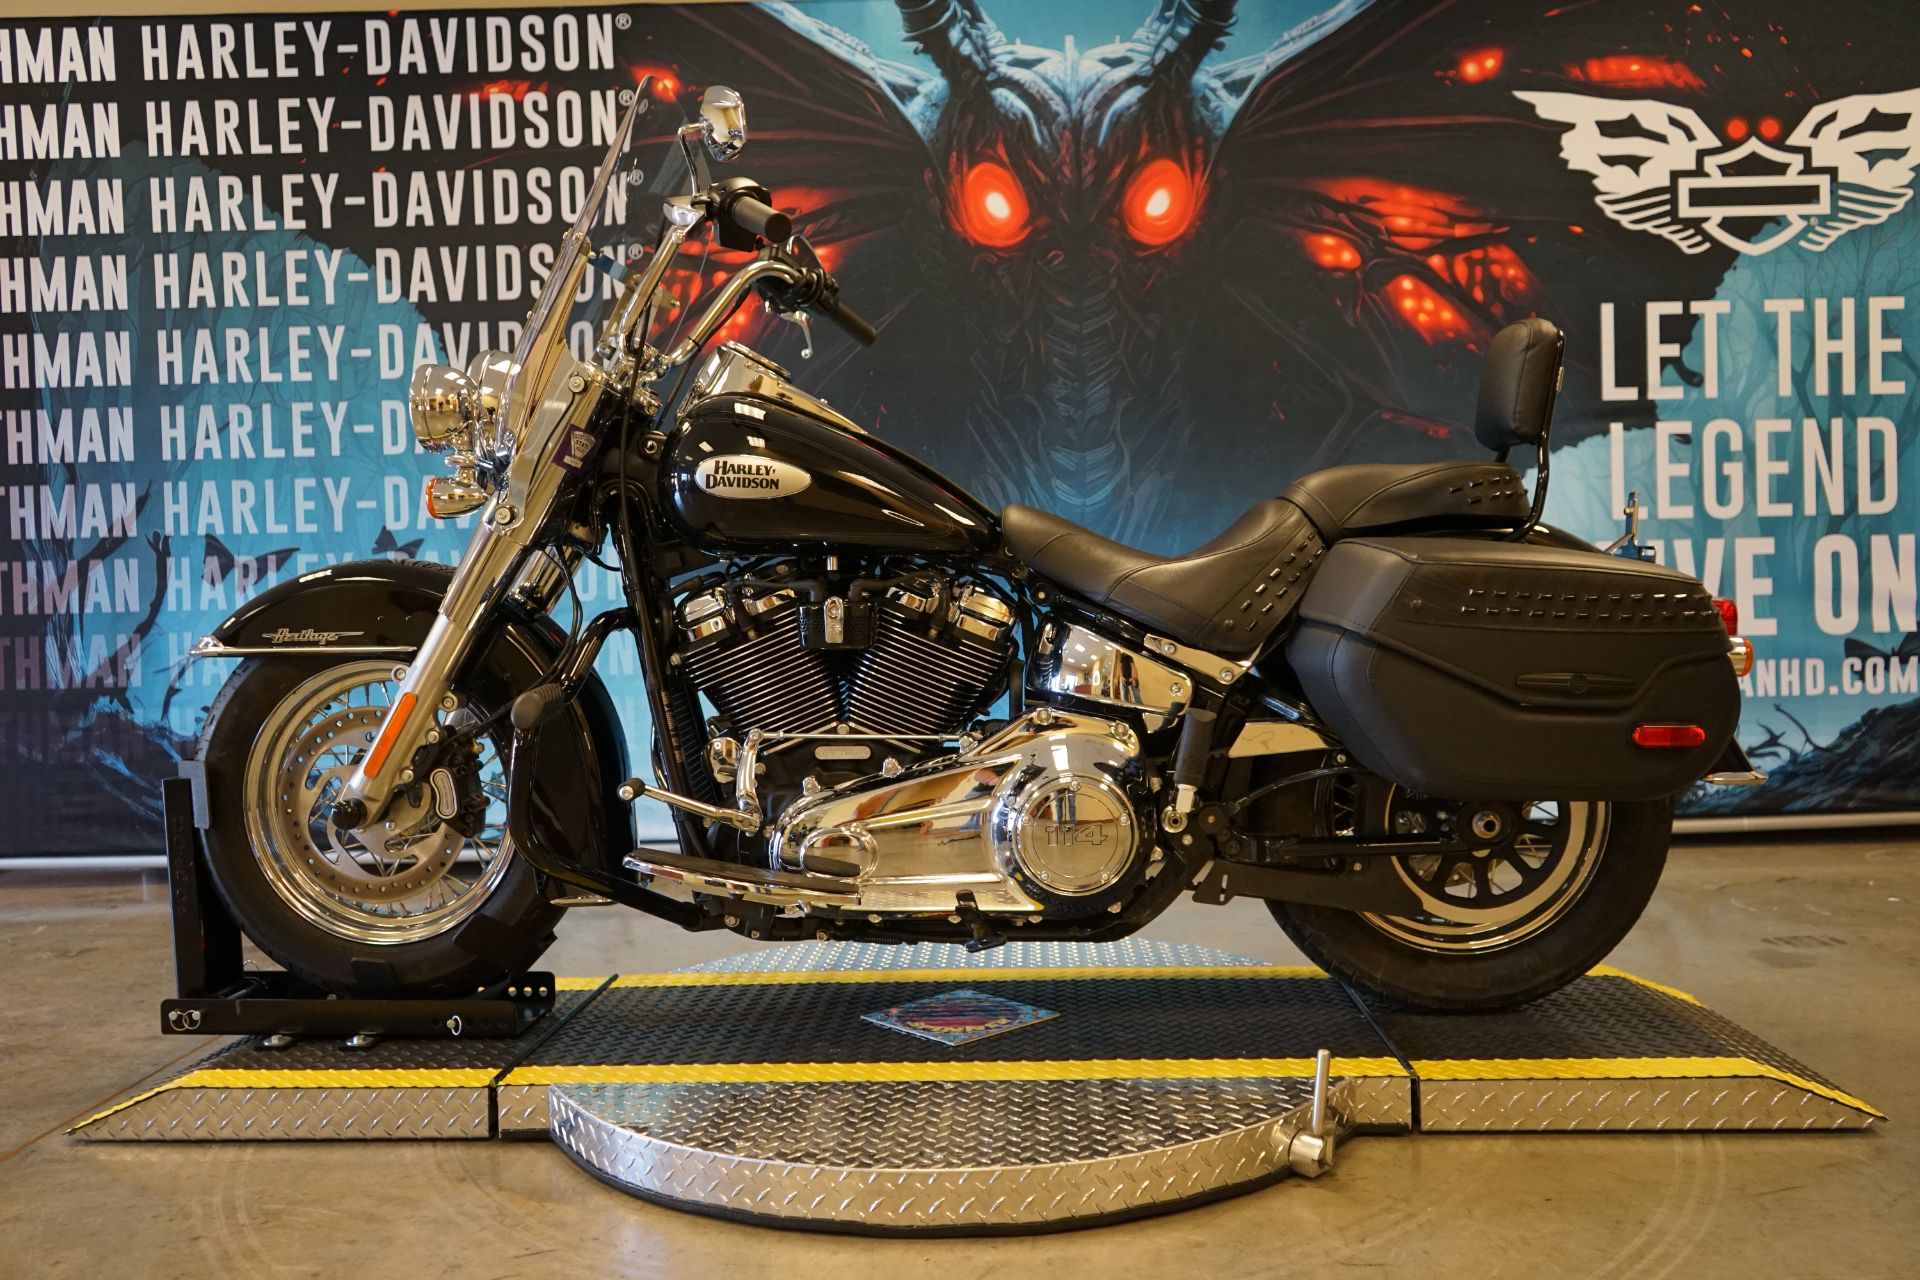 2022 Harley-Davidson Heritage Classic 114 in Williamstown, West Virginia - Photo 5